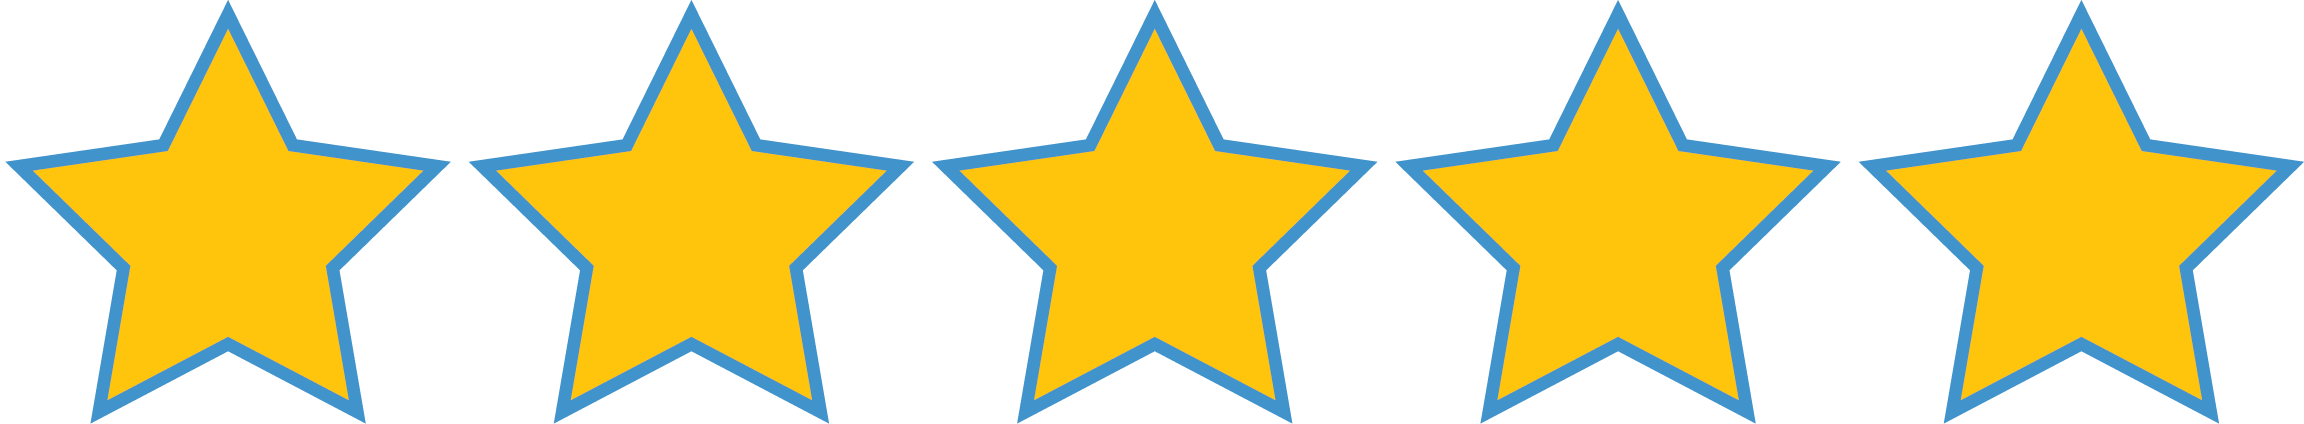 Reviews-Stars2